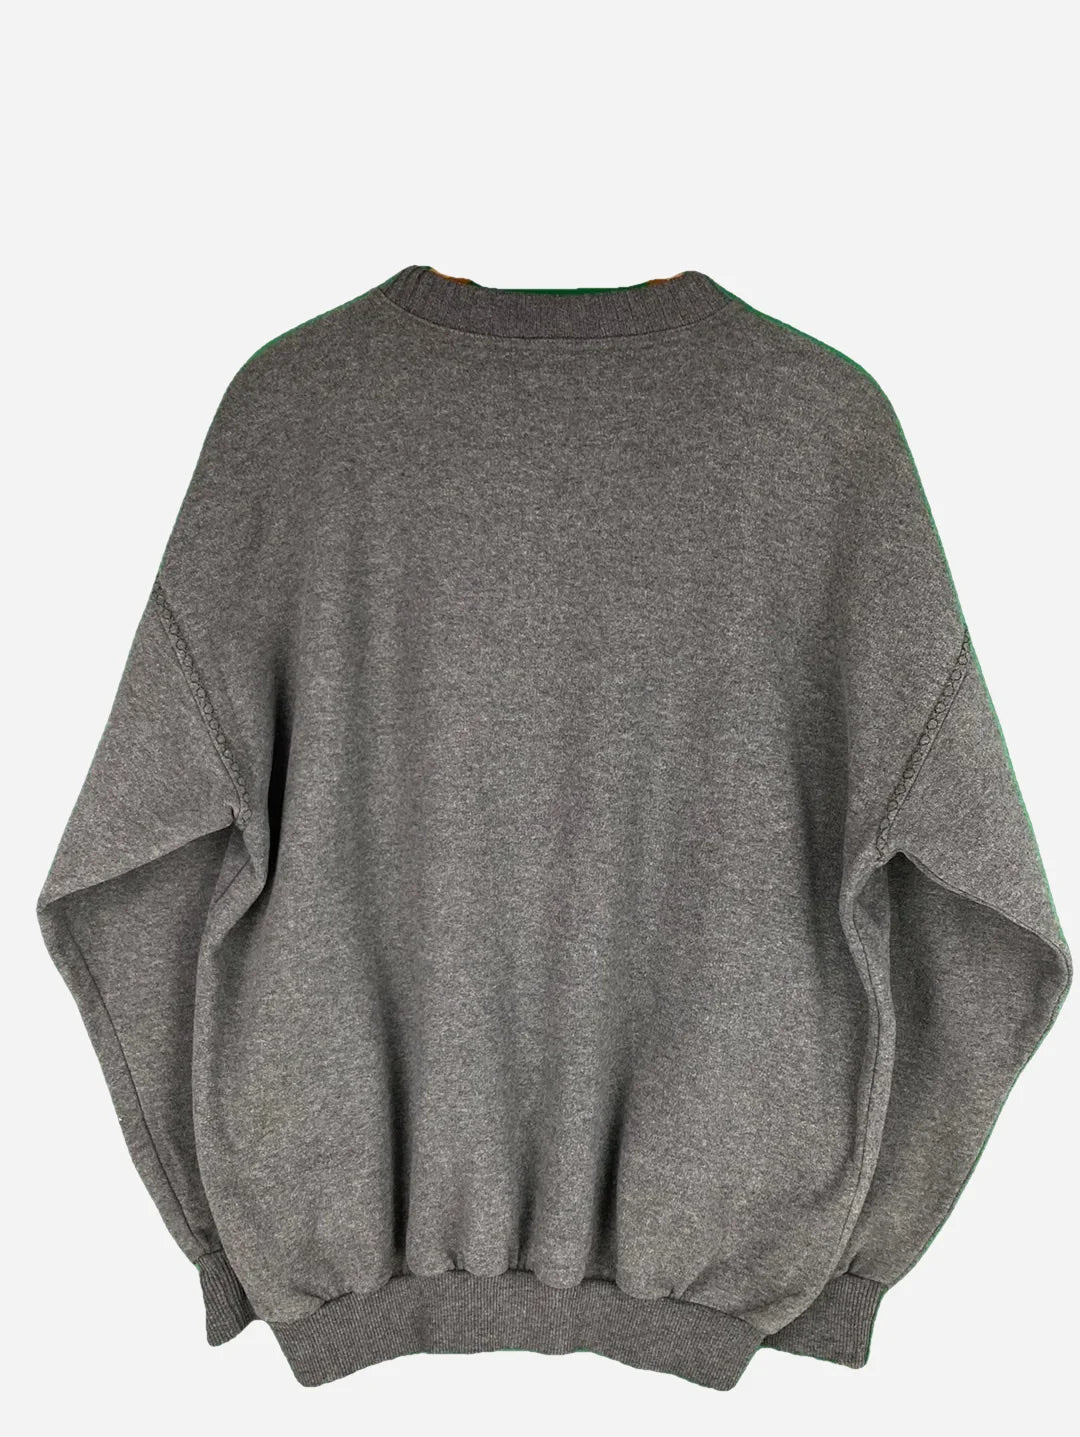 "Ontario" Sweater (M)